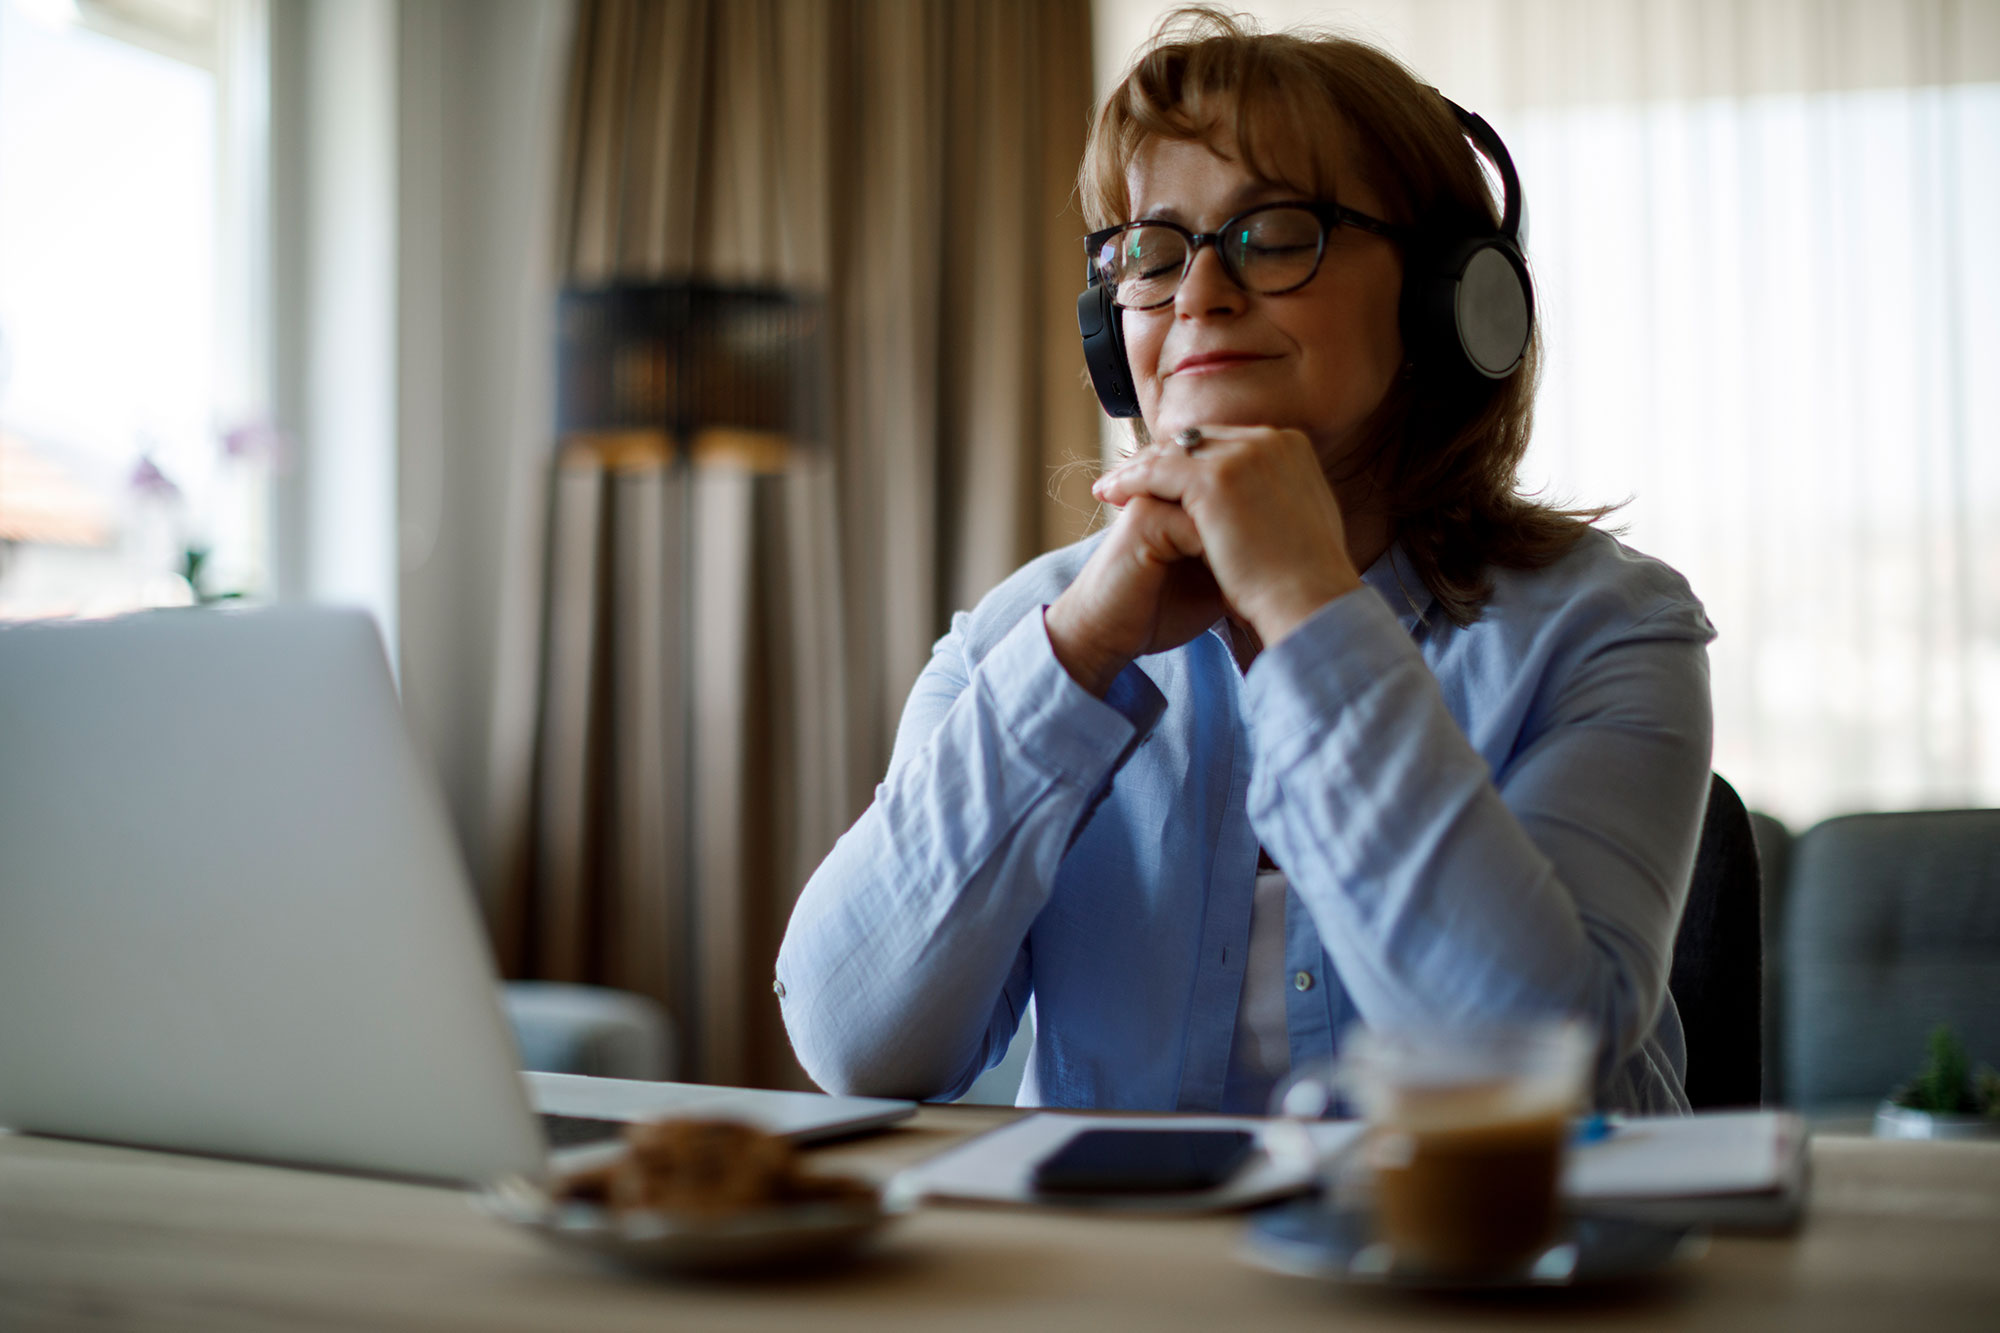 Smiling senior woman with wireless headphones enjoying music at home